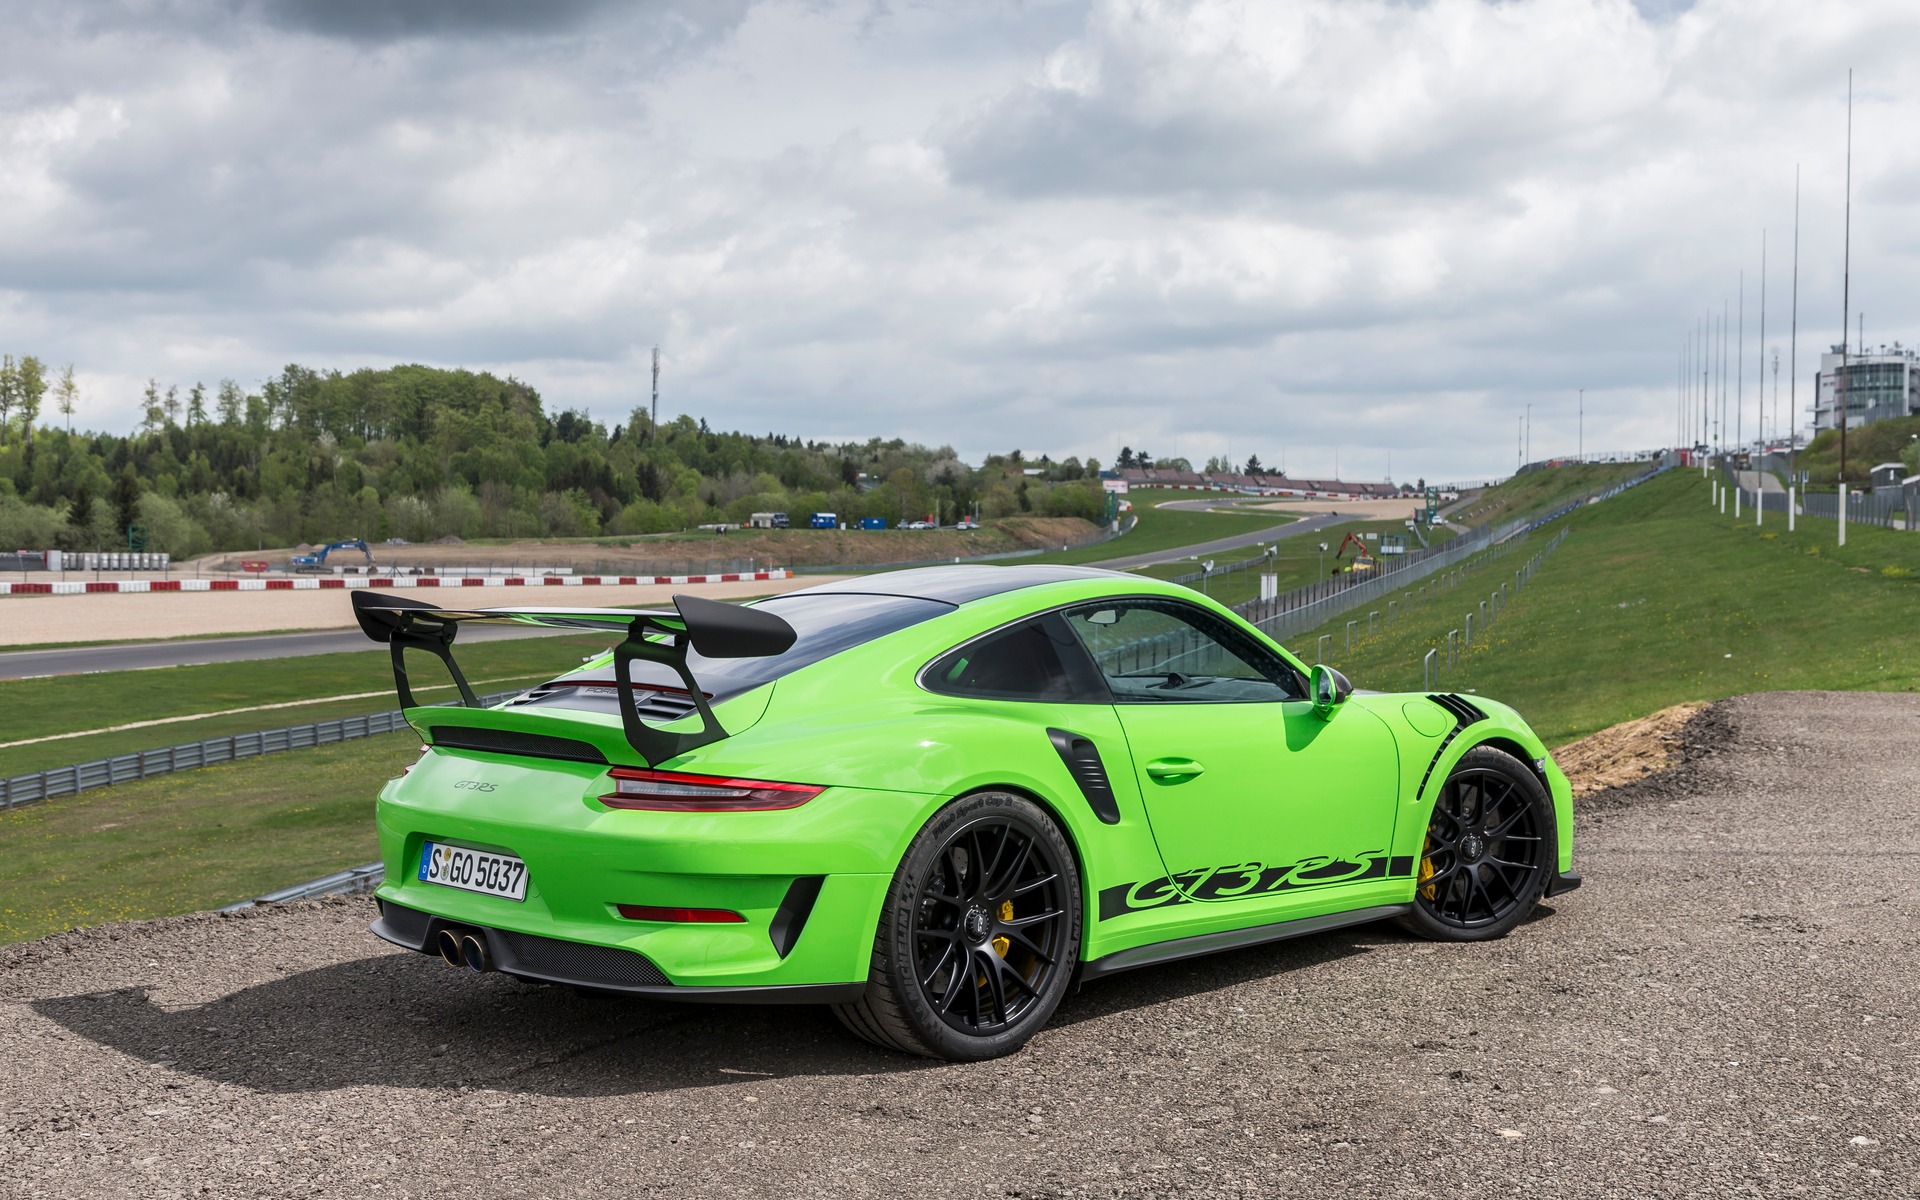 <p>2019 Porsche 911 GT3 RS - Shown here in Lizard Green.</p>